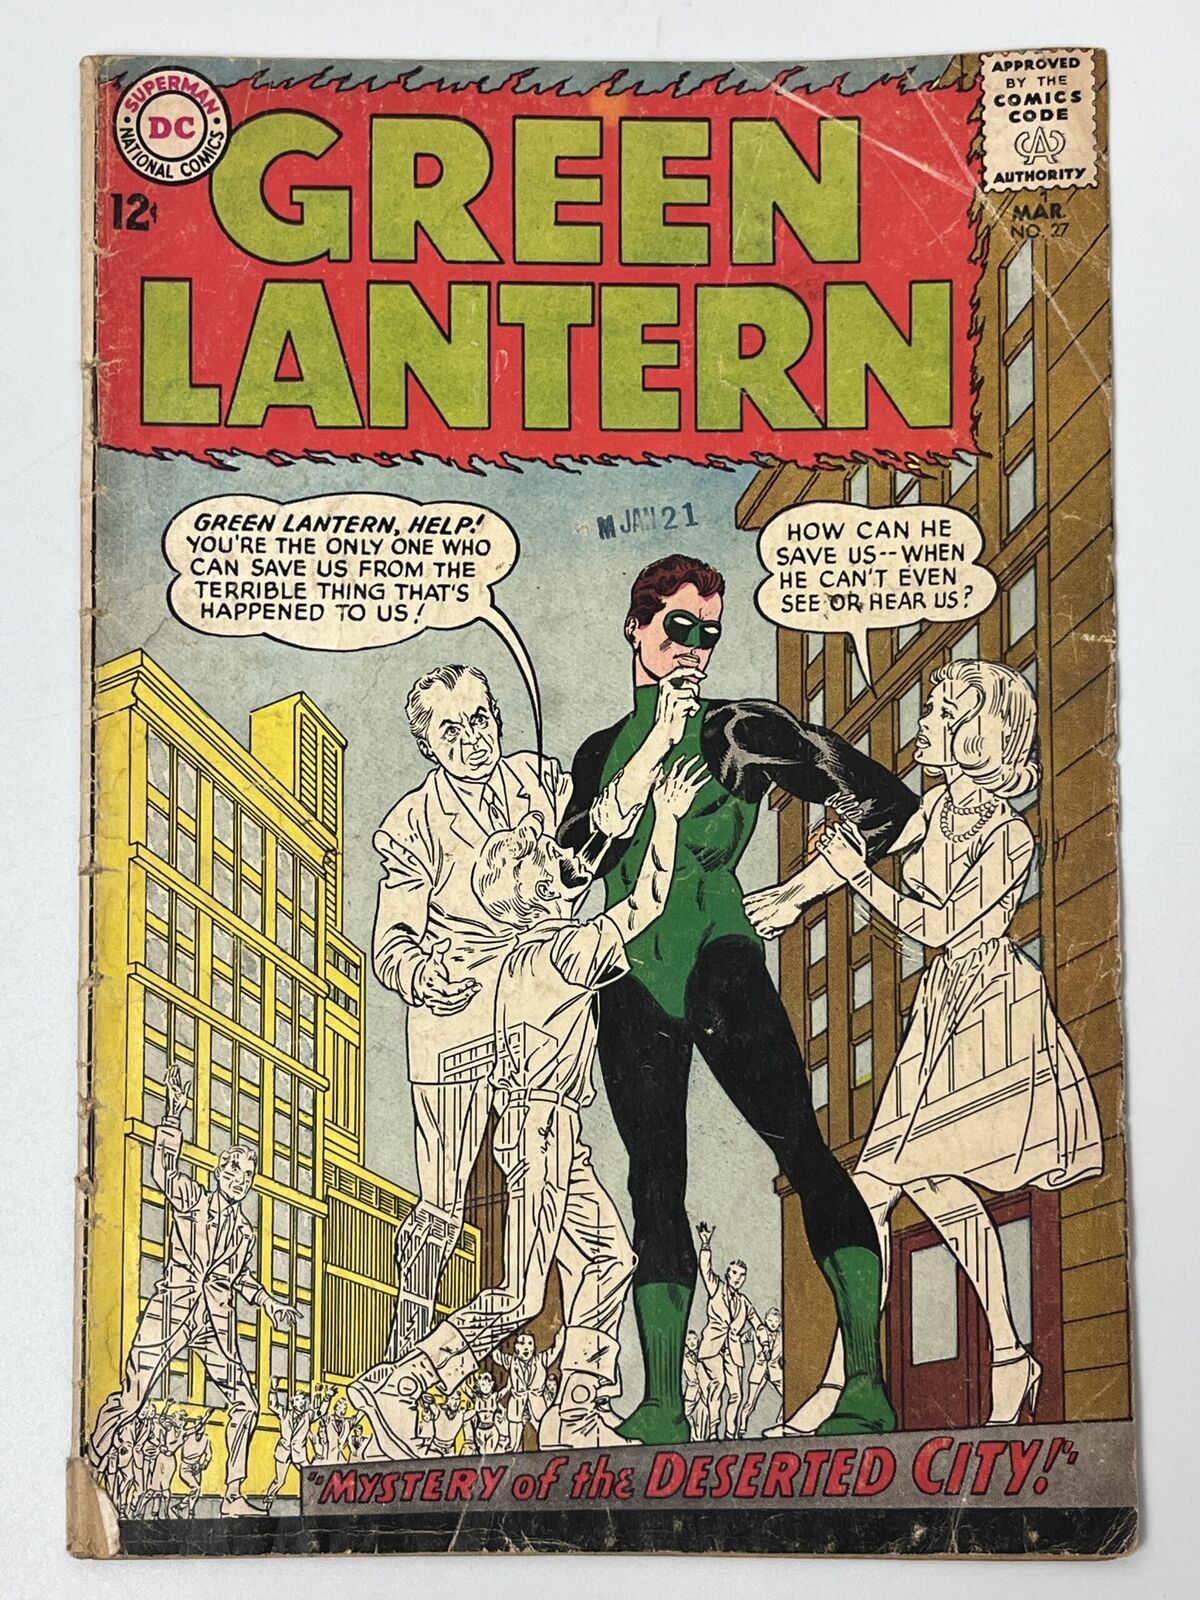 Green Lantern #27 (1964) in 3.0 Good/Very Good